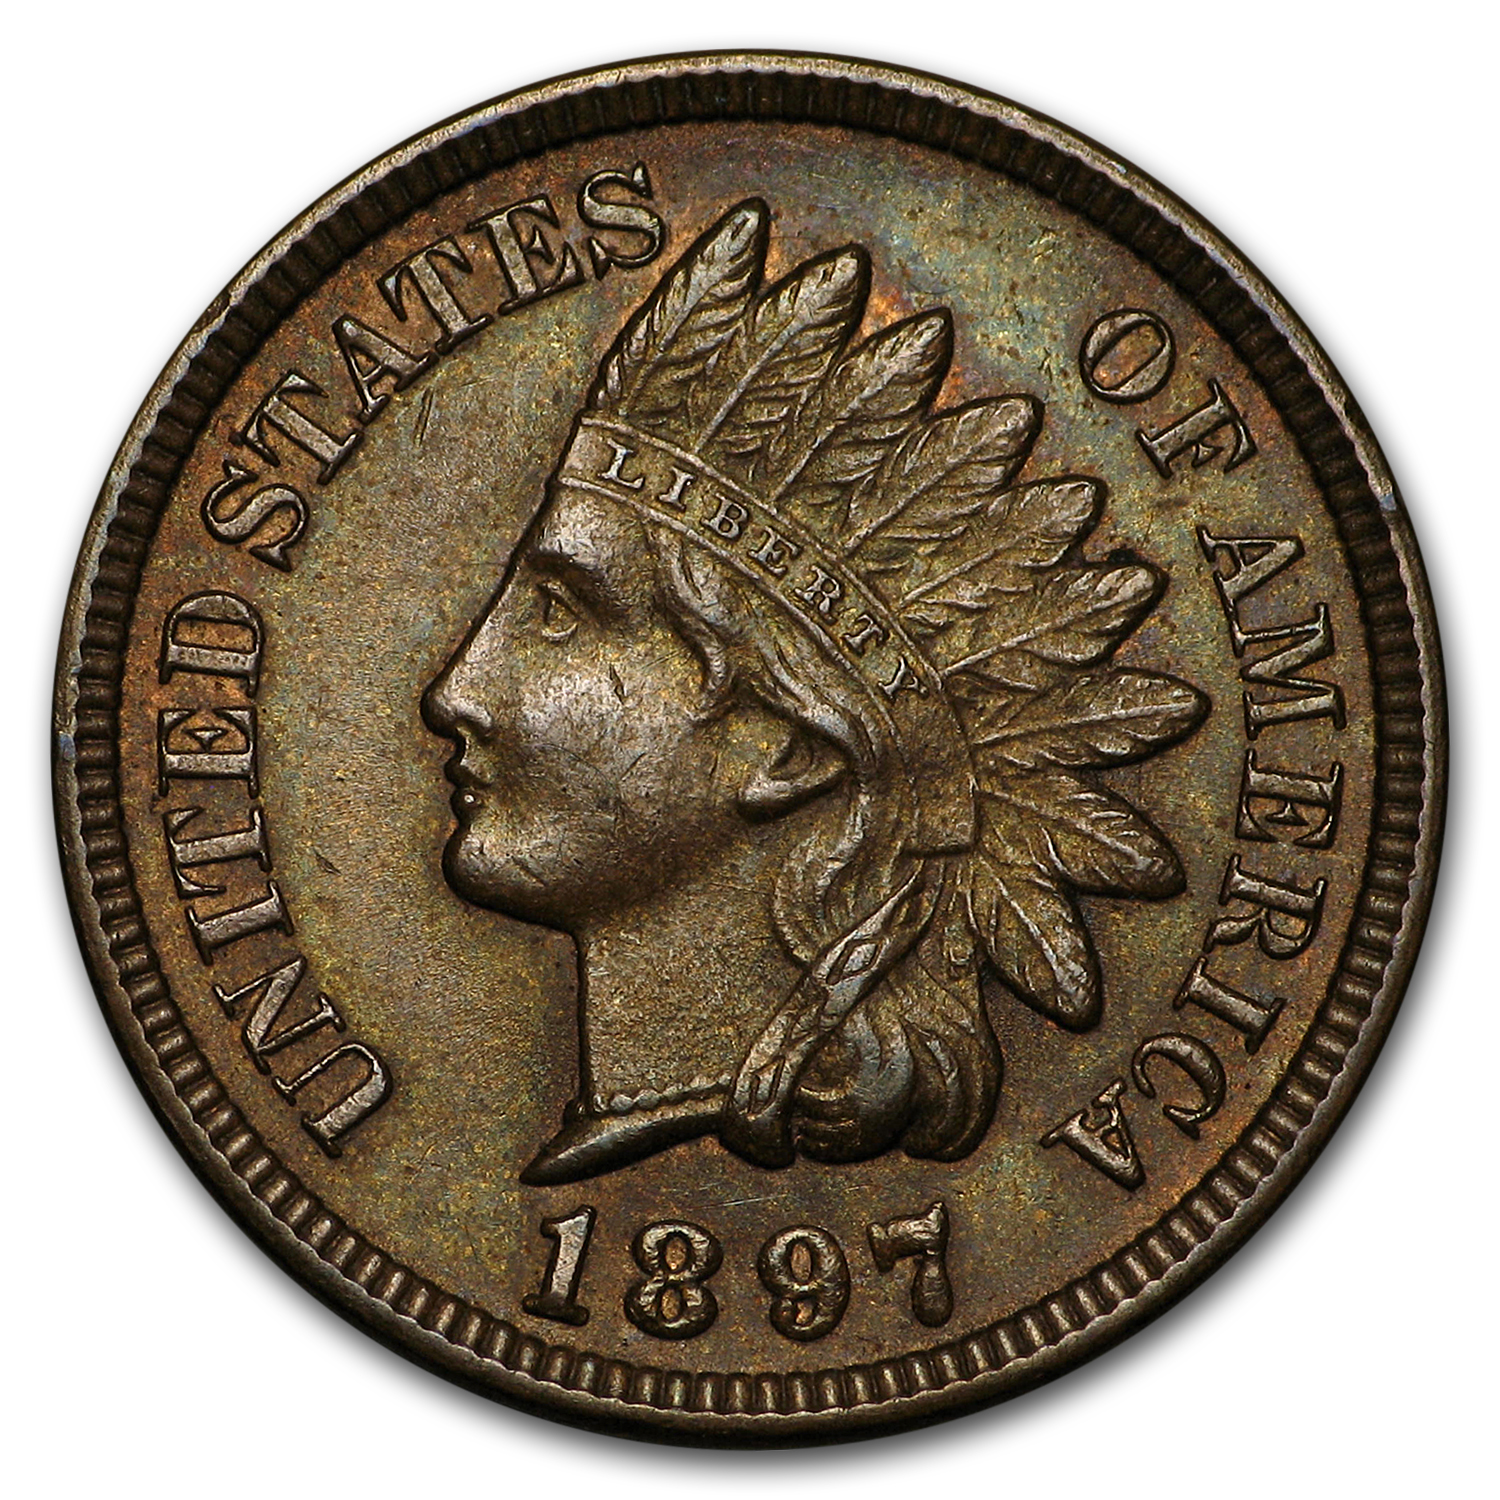 Buy 1897 Indian Head Cent BU